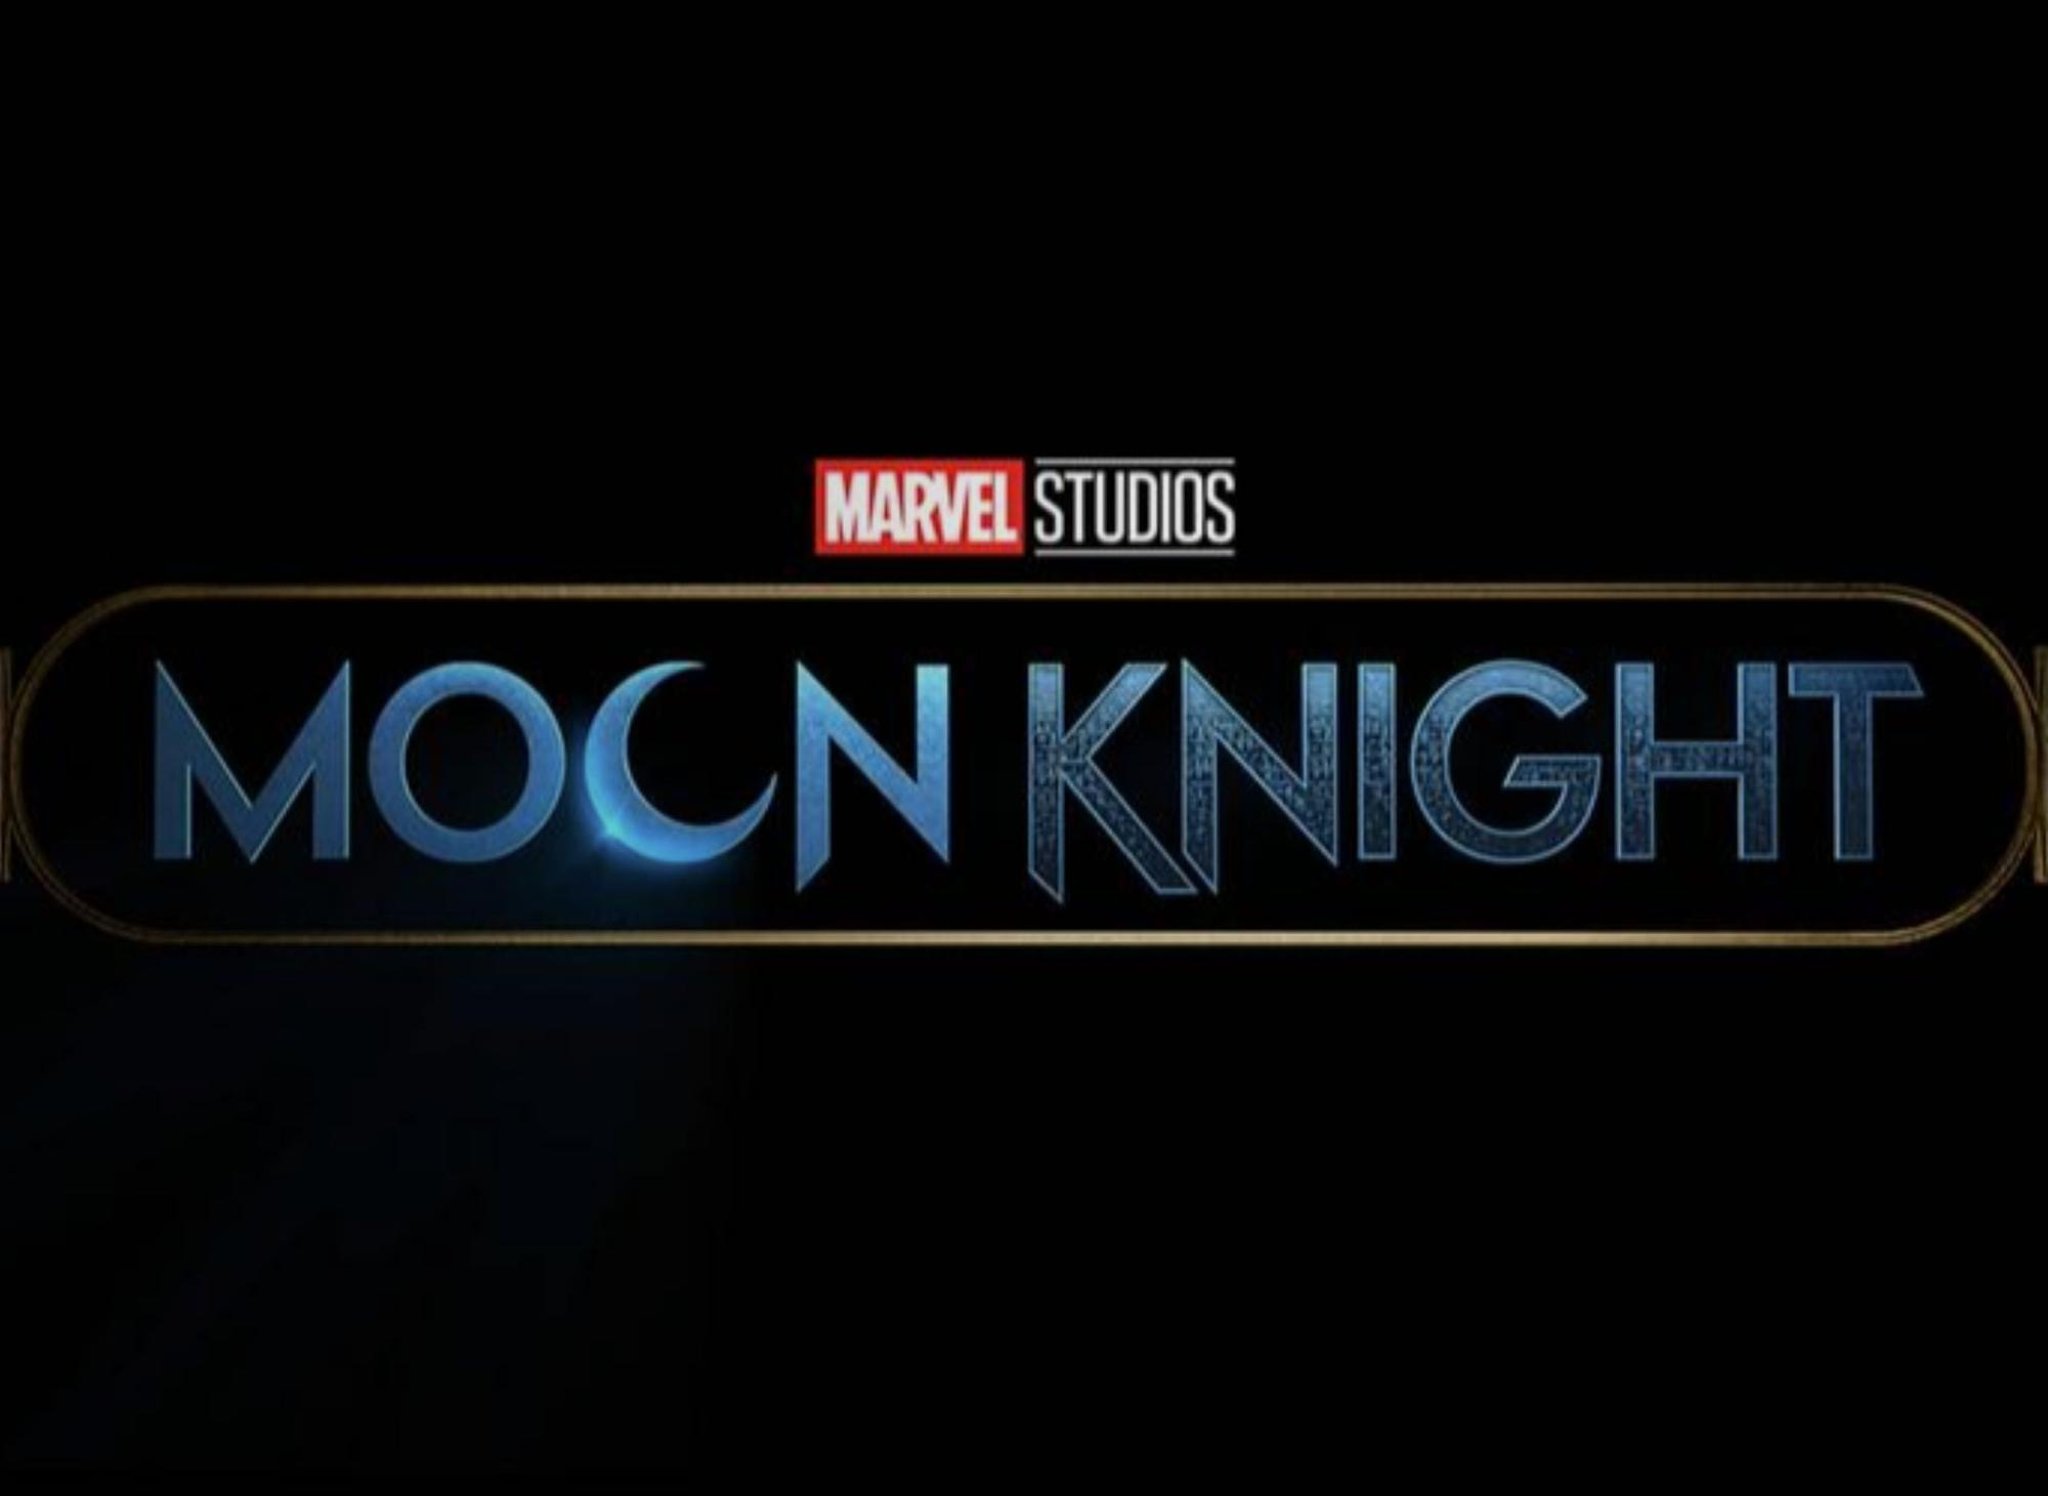 Midnight man moon knight